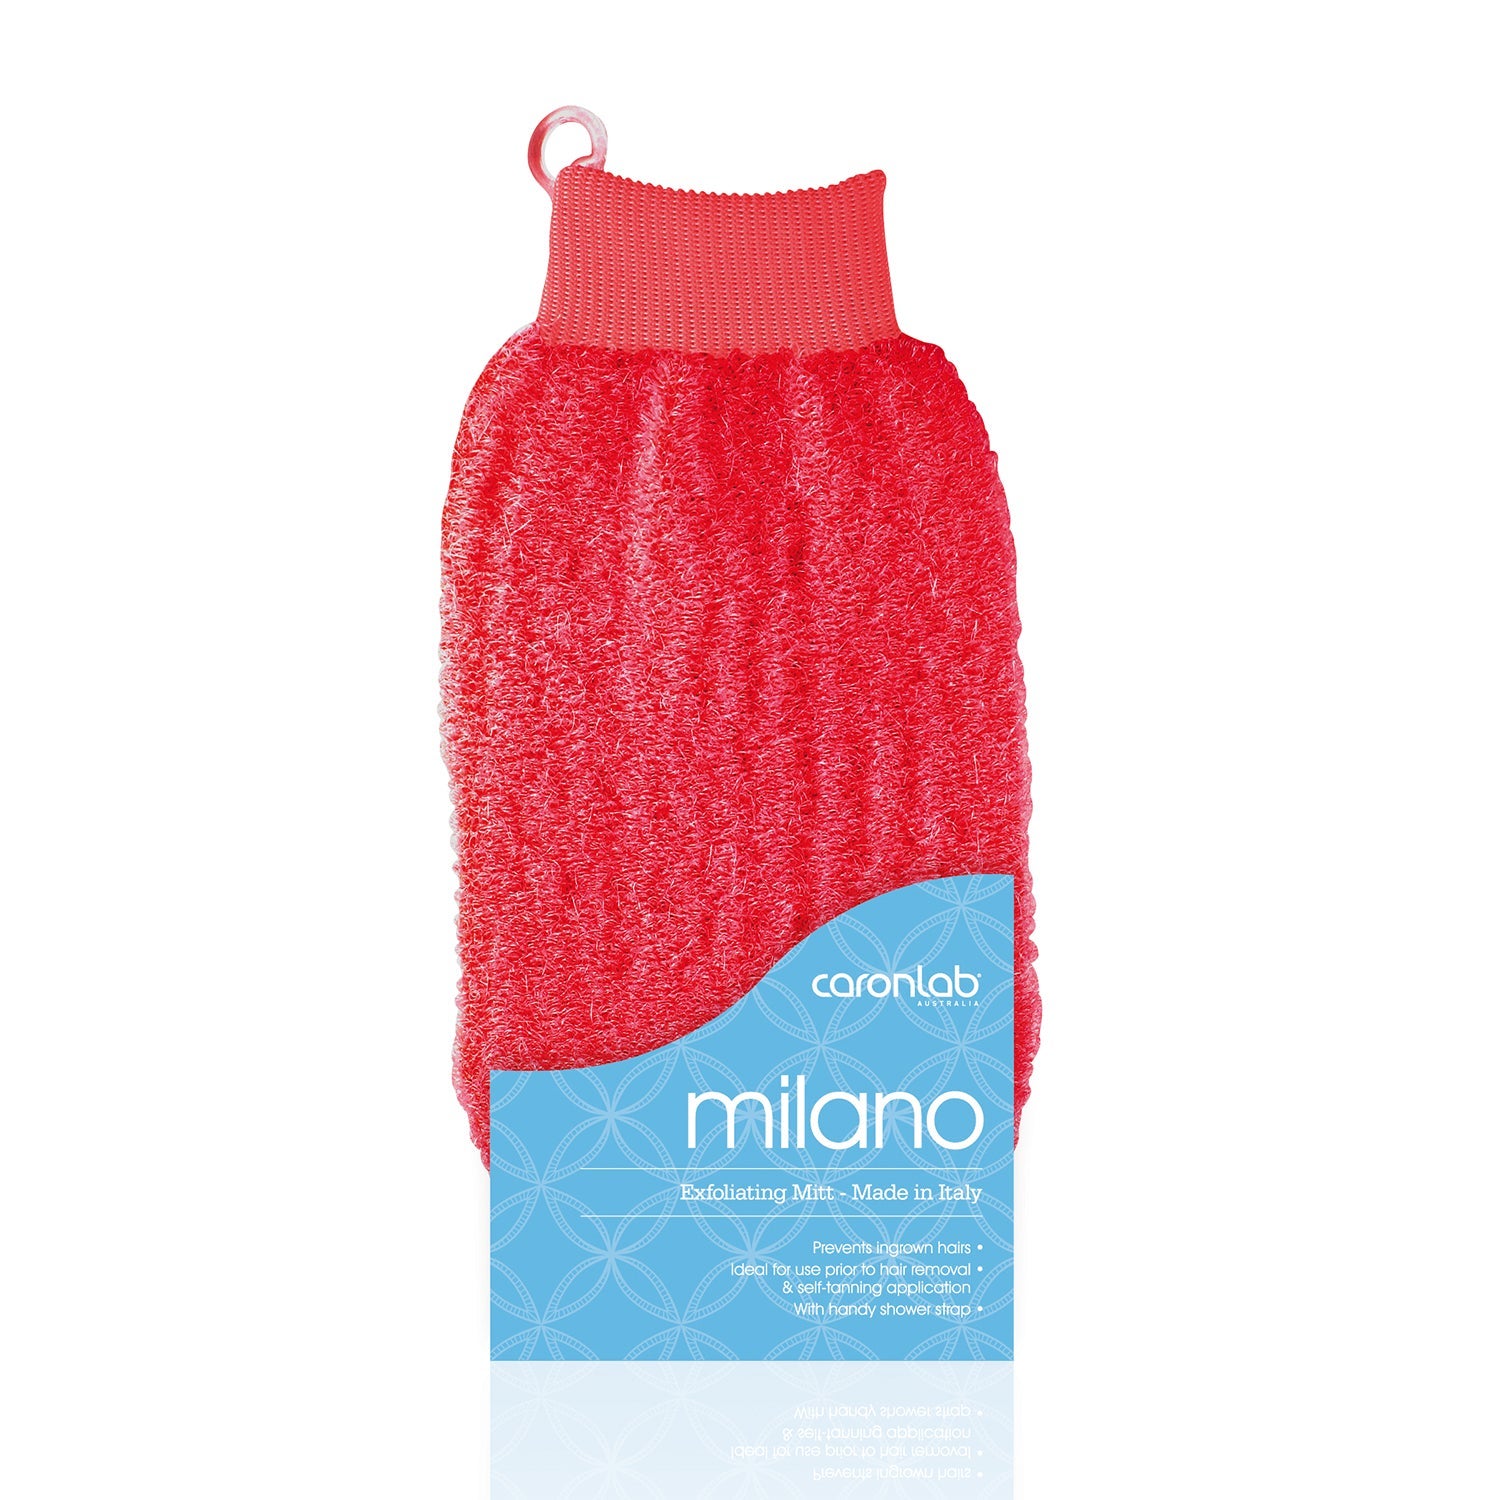 Caronlab Milano Body Exfoliating Massage Glove Mitt Red